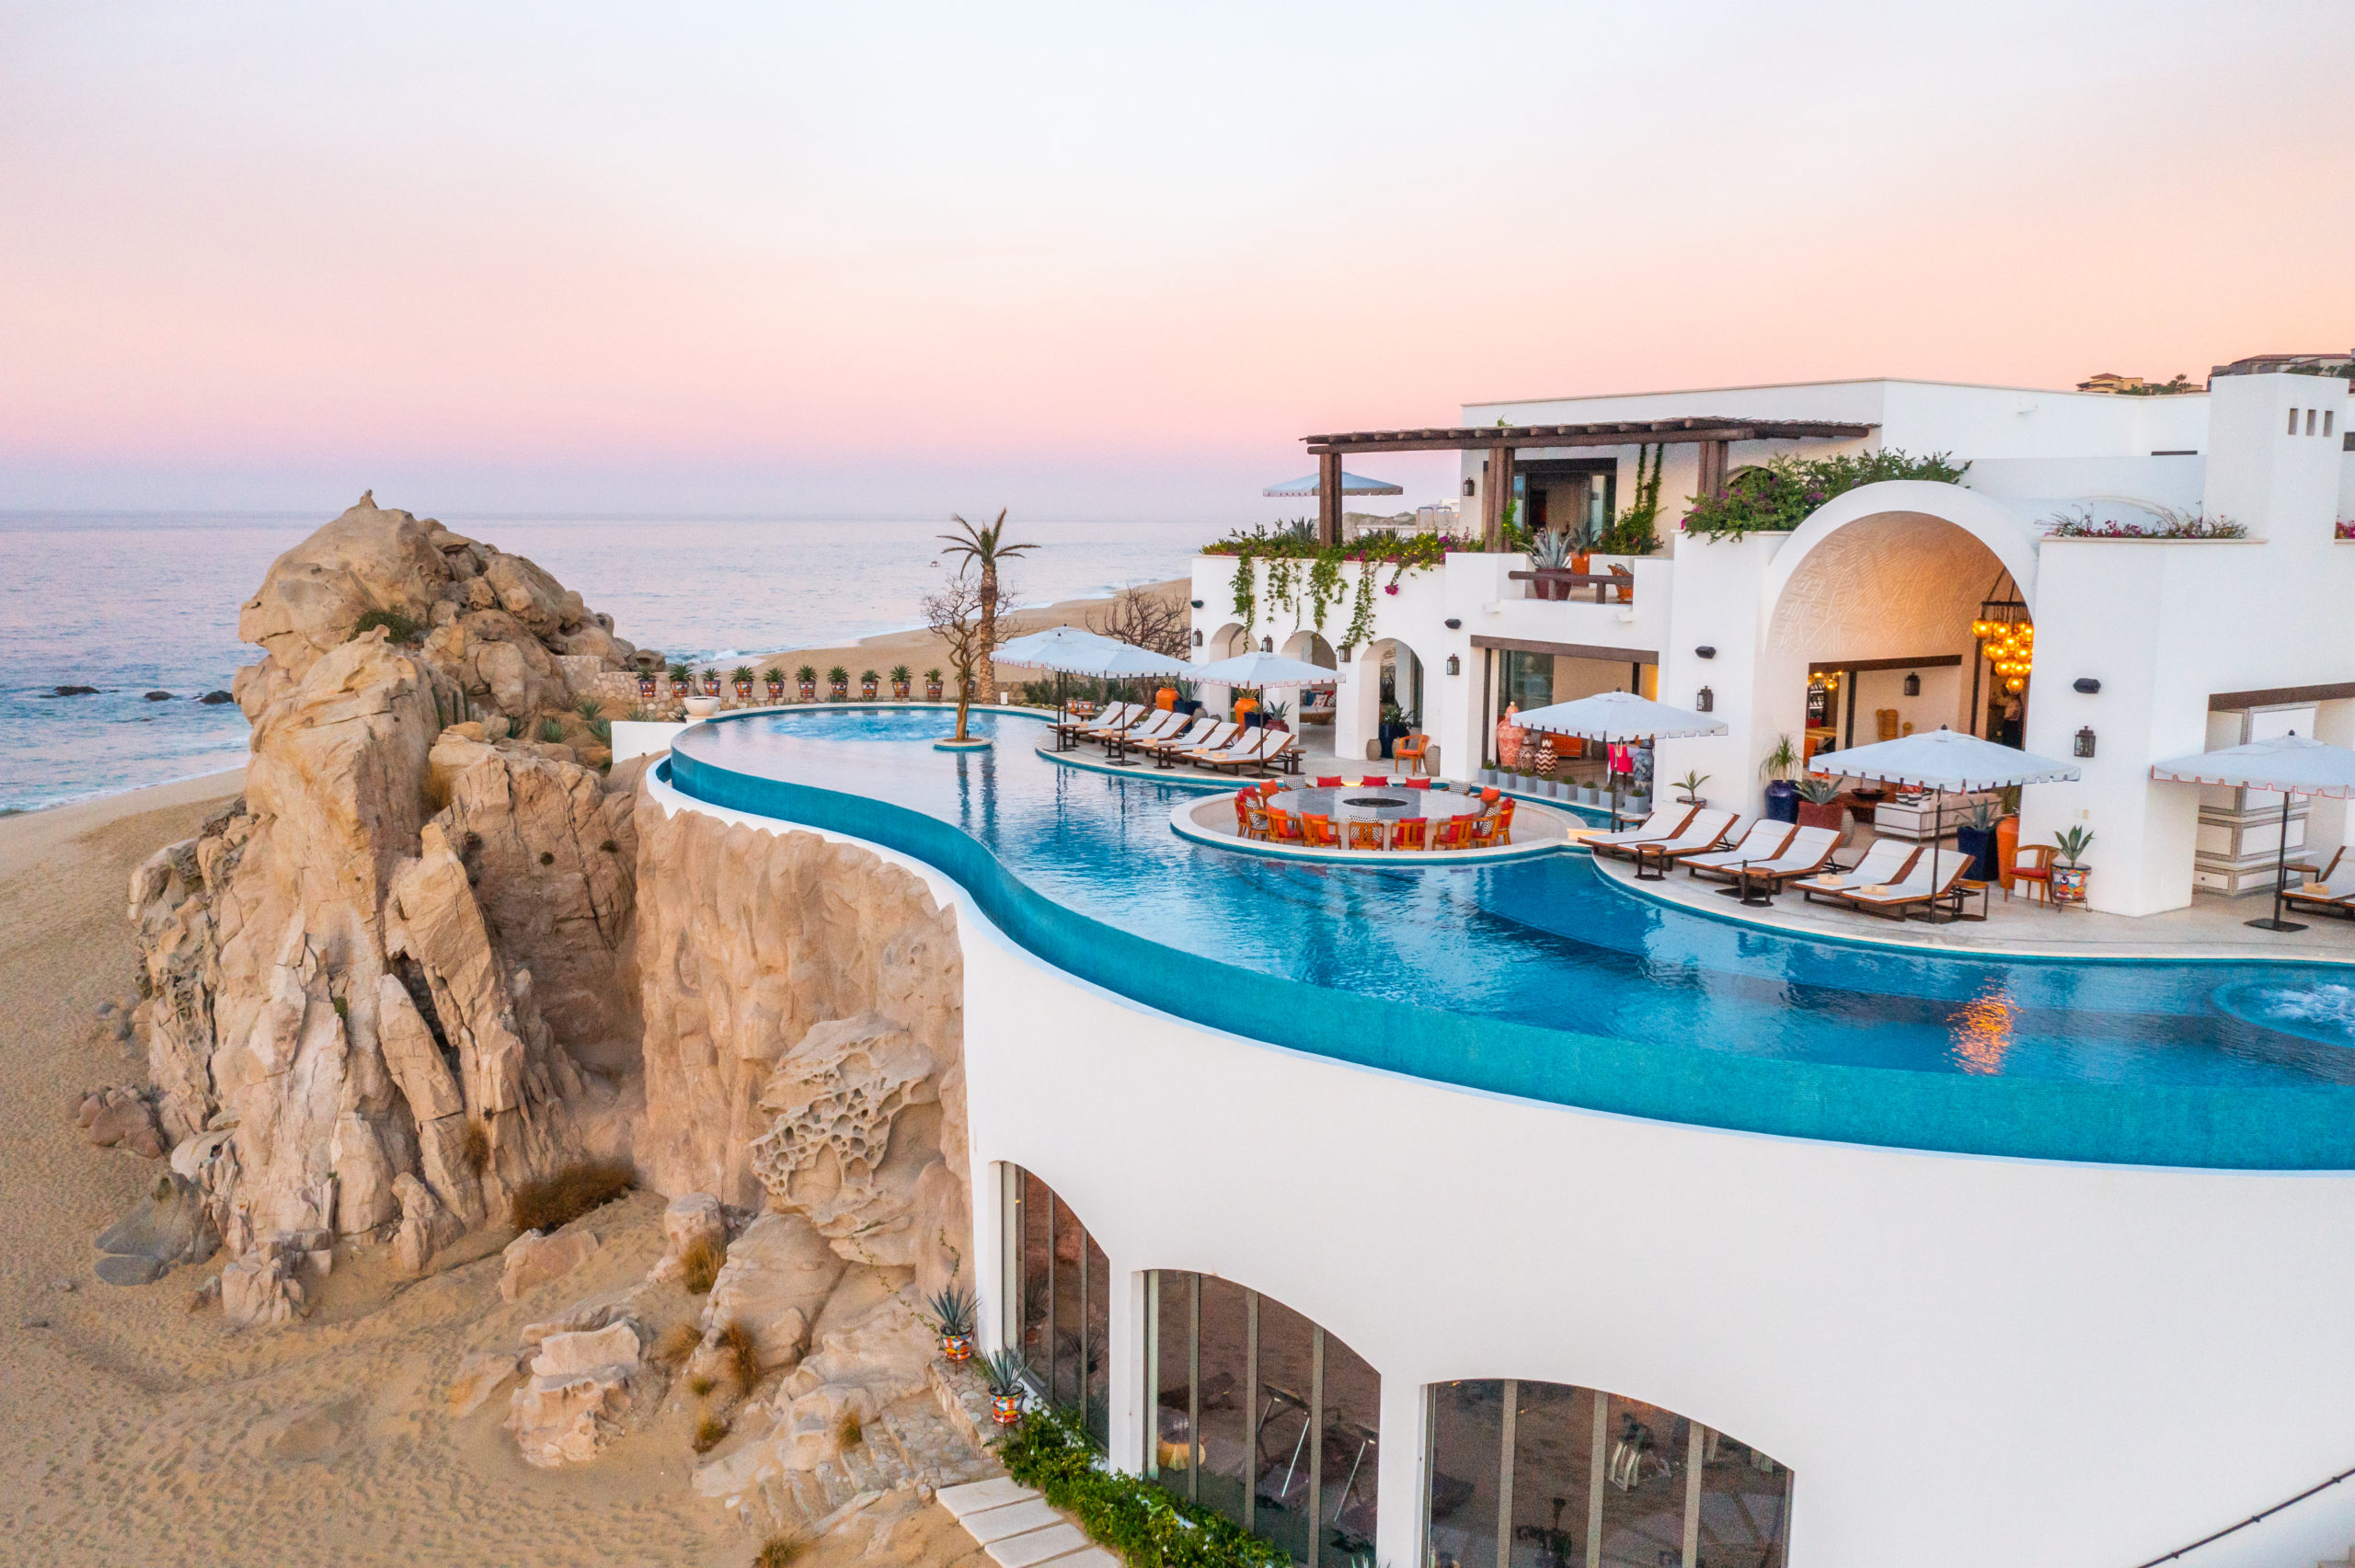 Villa La Datcha: 5 Reasons to Vacation at Cabo’s Stunning Luxury Estate